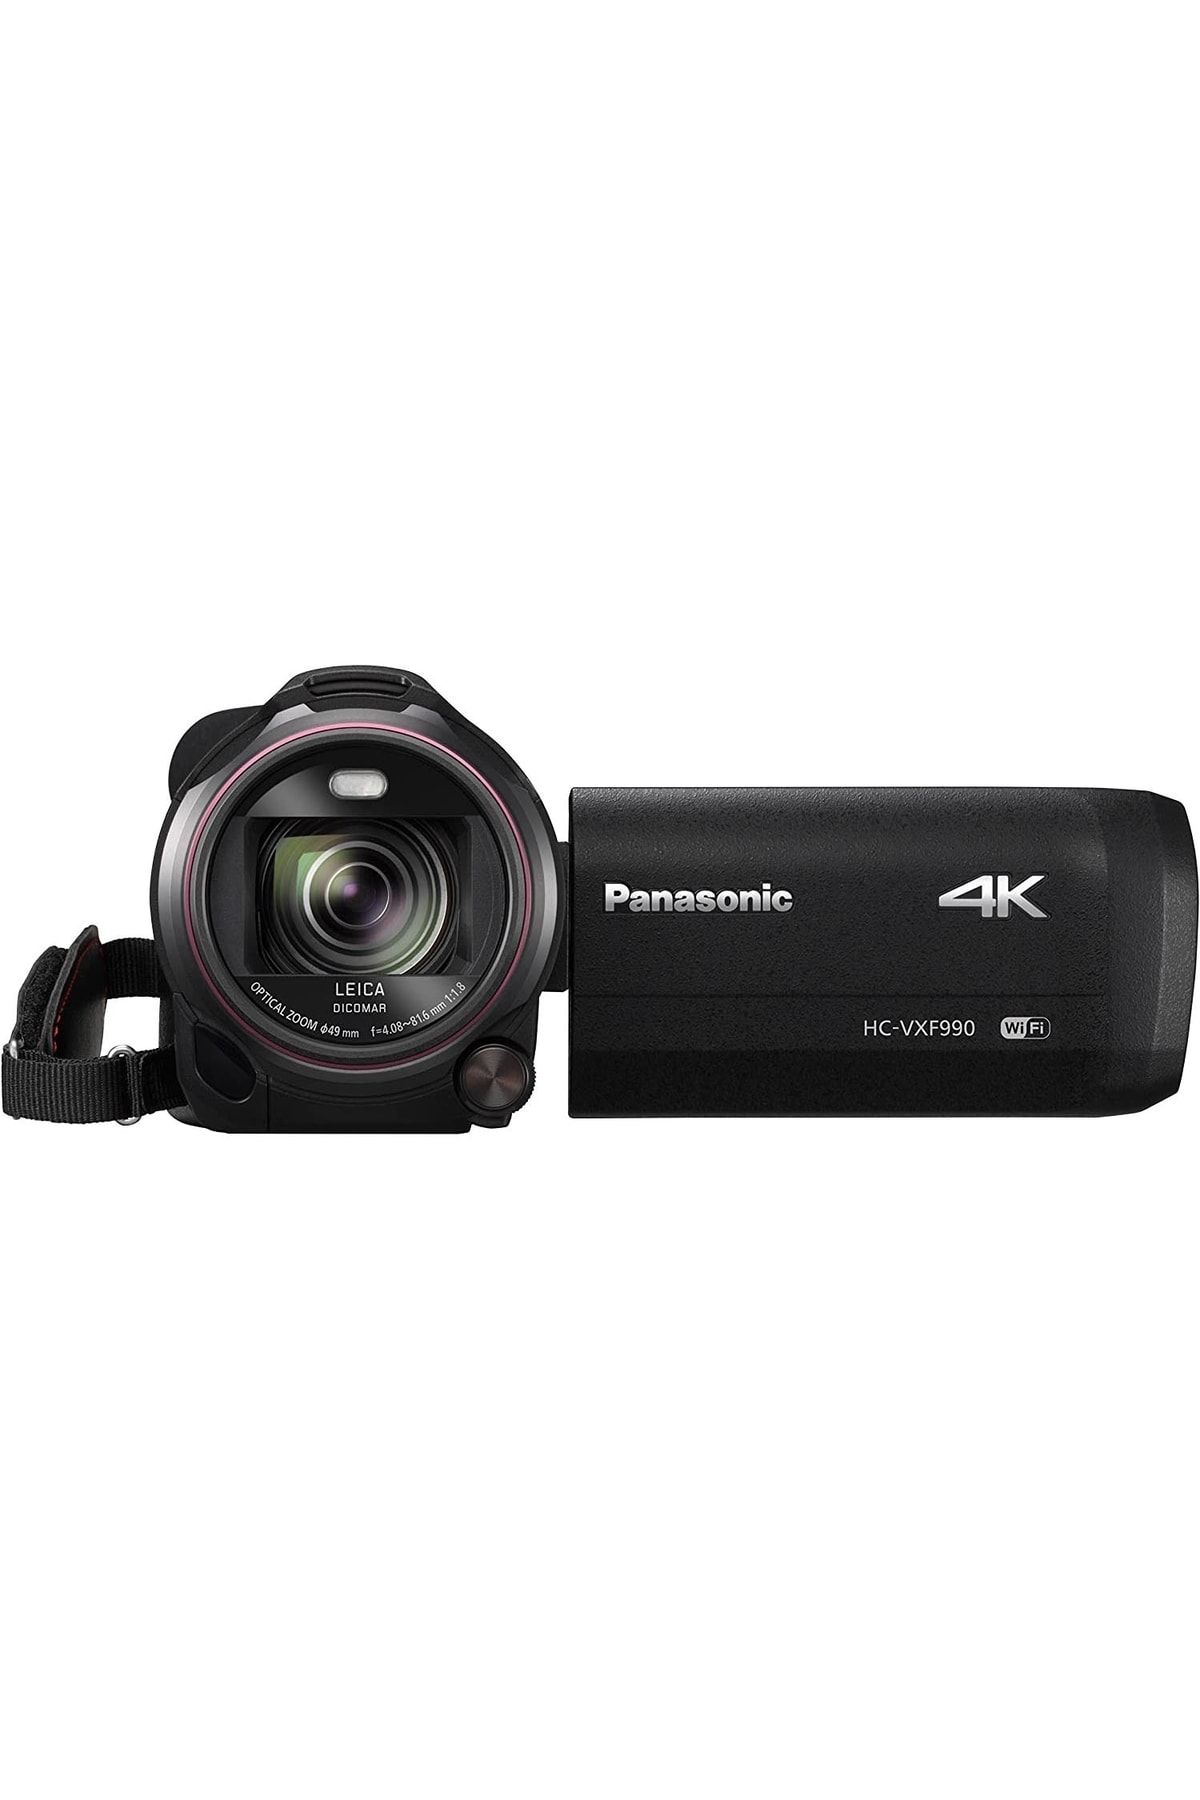 Panasonic Hc-vxf990 Eg-k 4k Ultra Hd Video Kamera